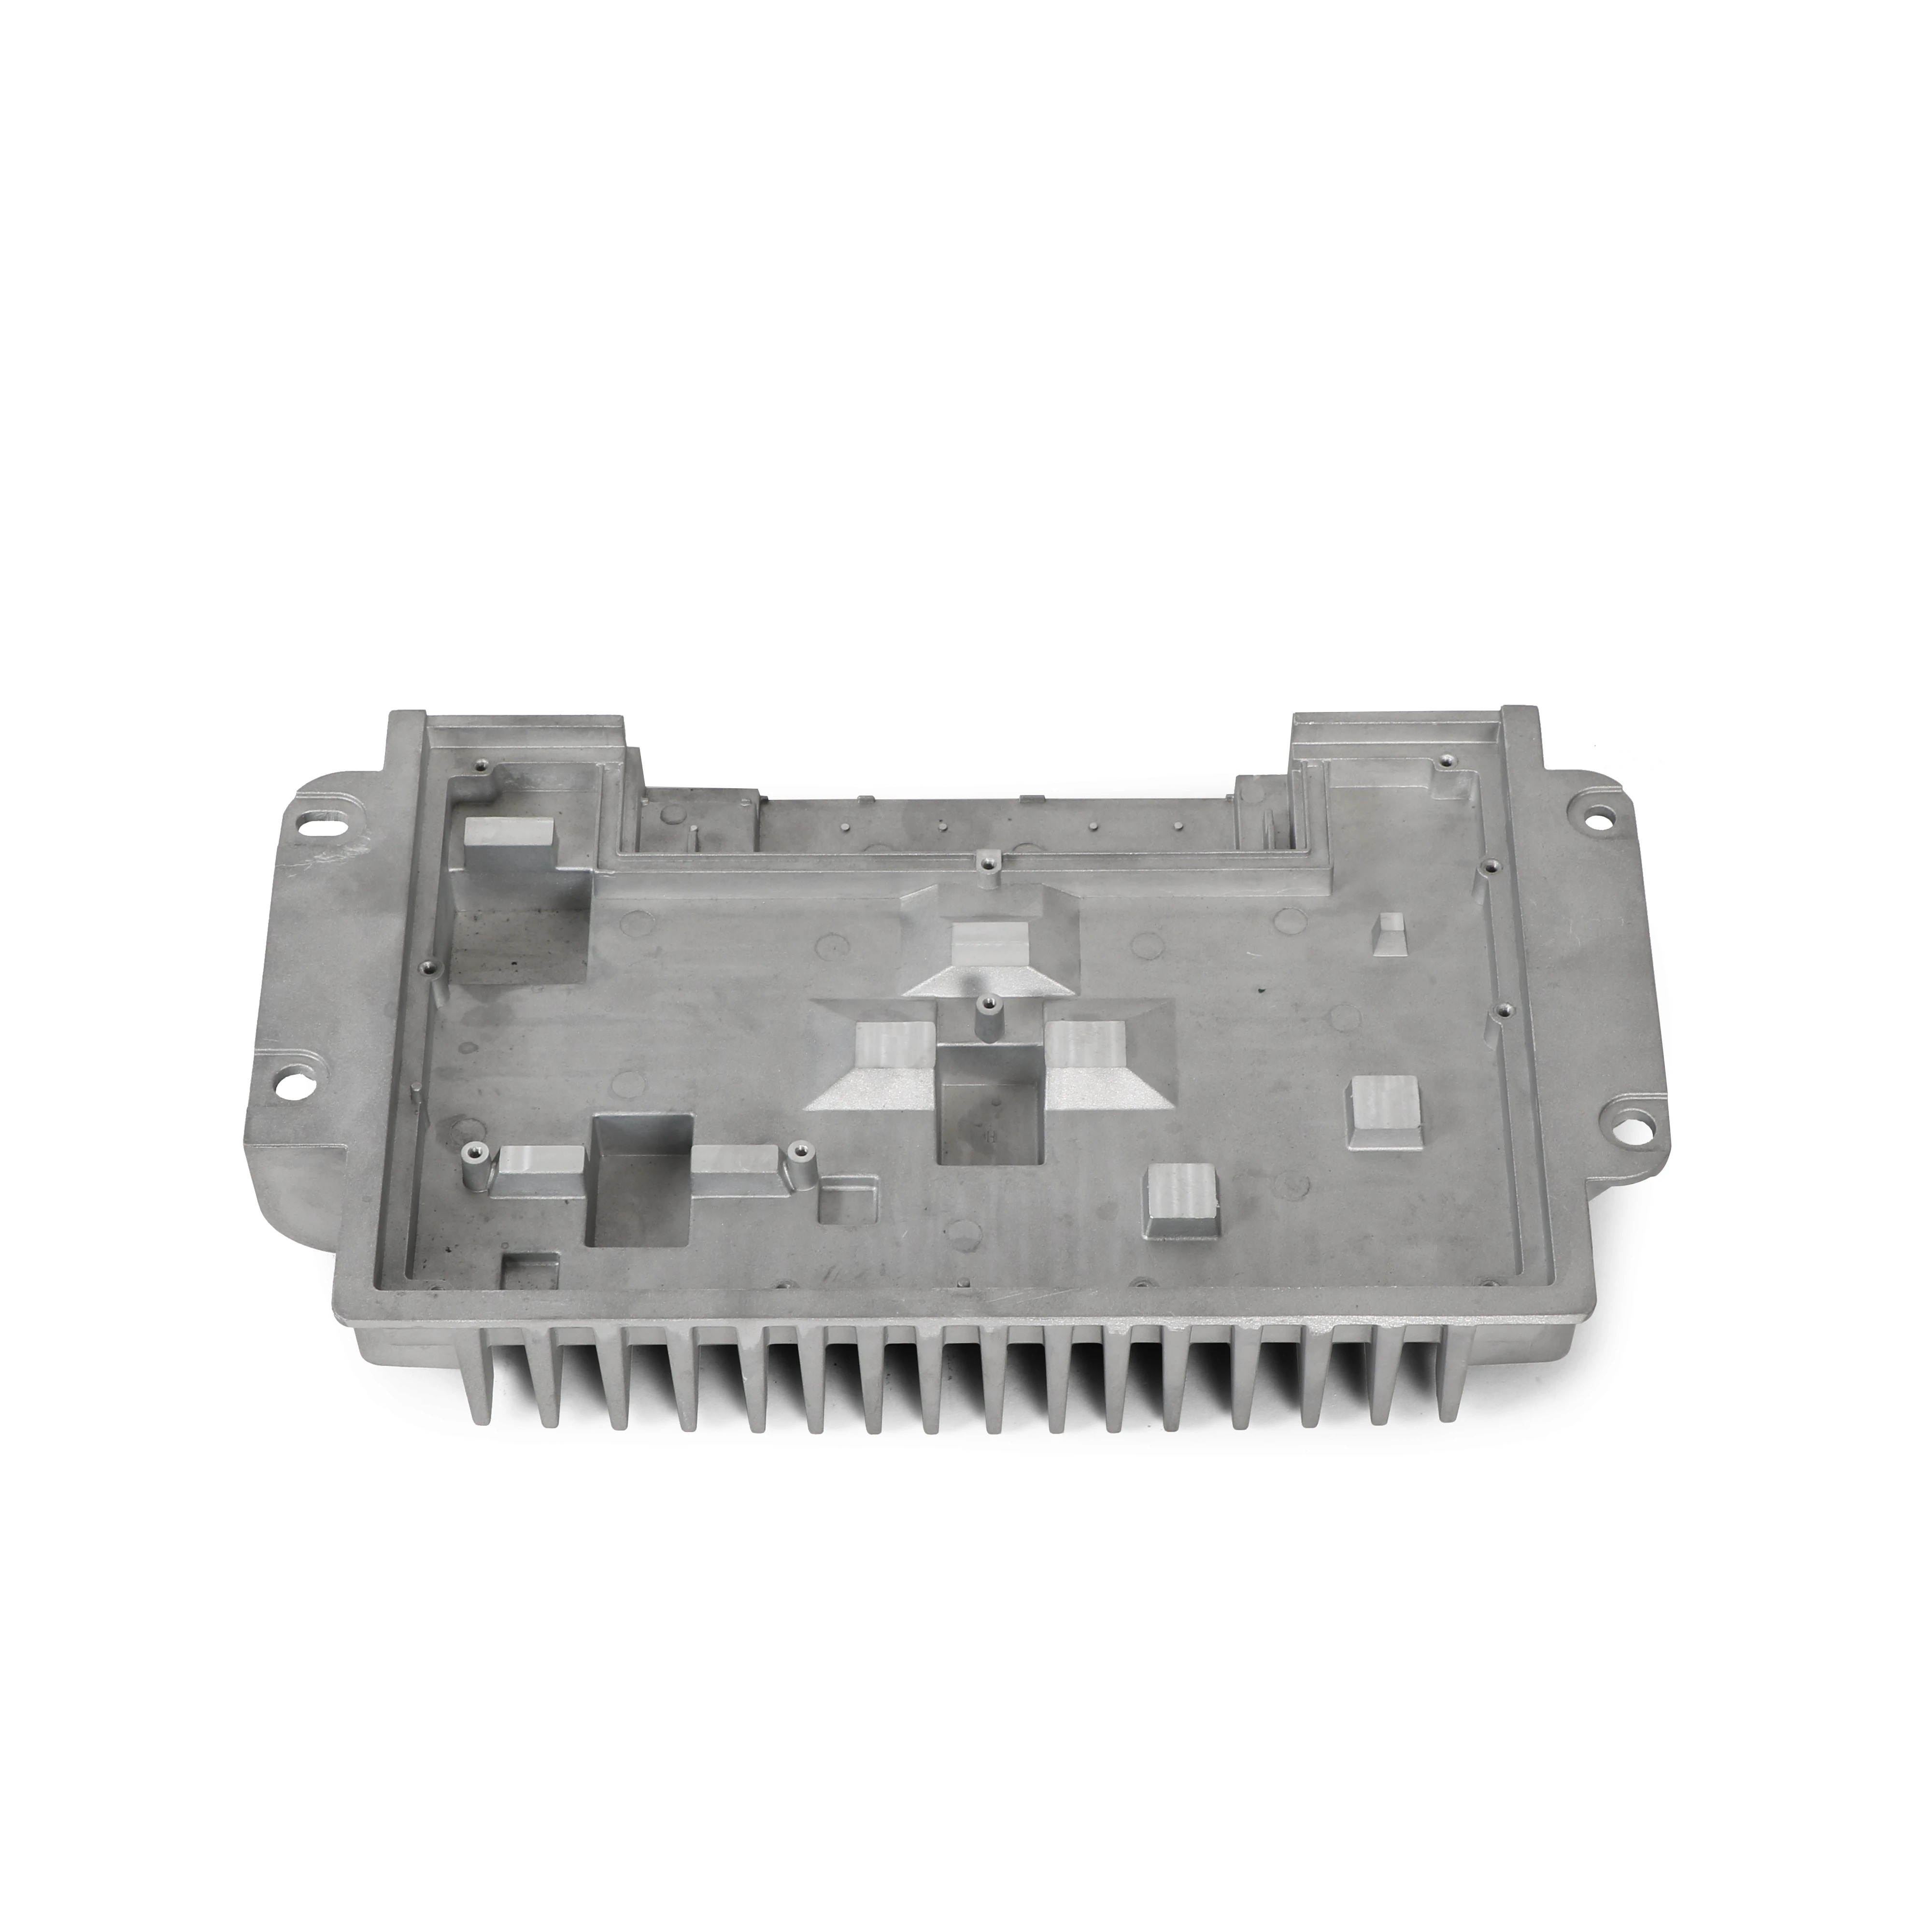 Professional production ADC12 aluminum alloy die casting for automotive audio parts IATF 16949